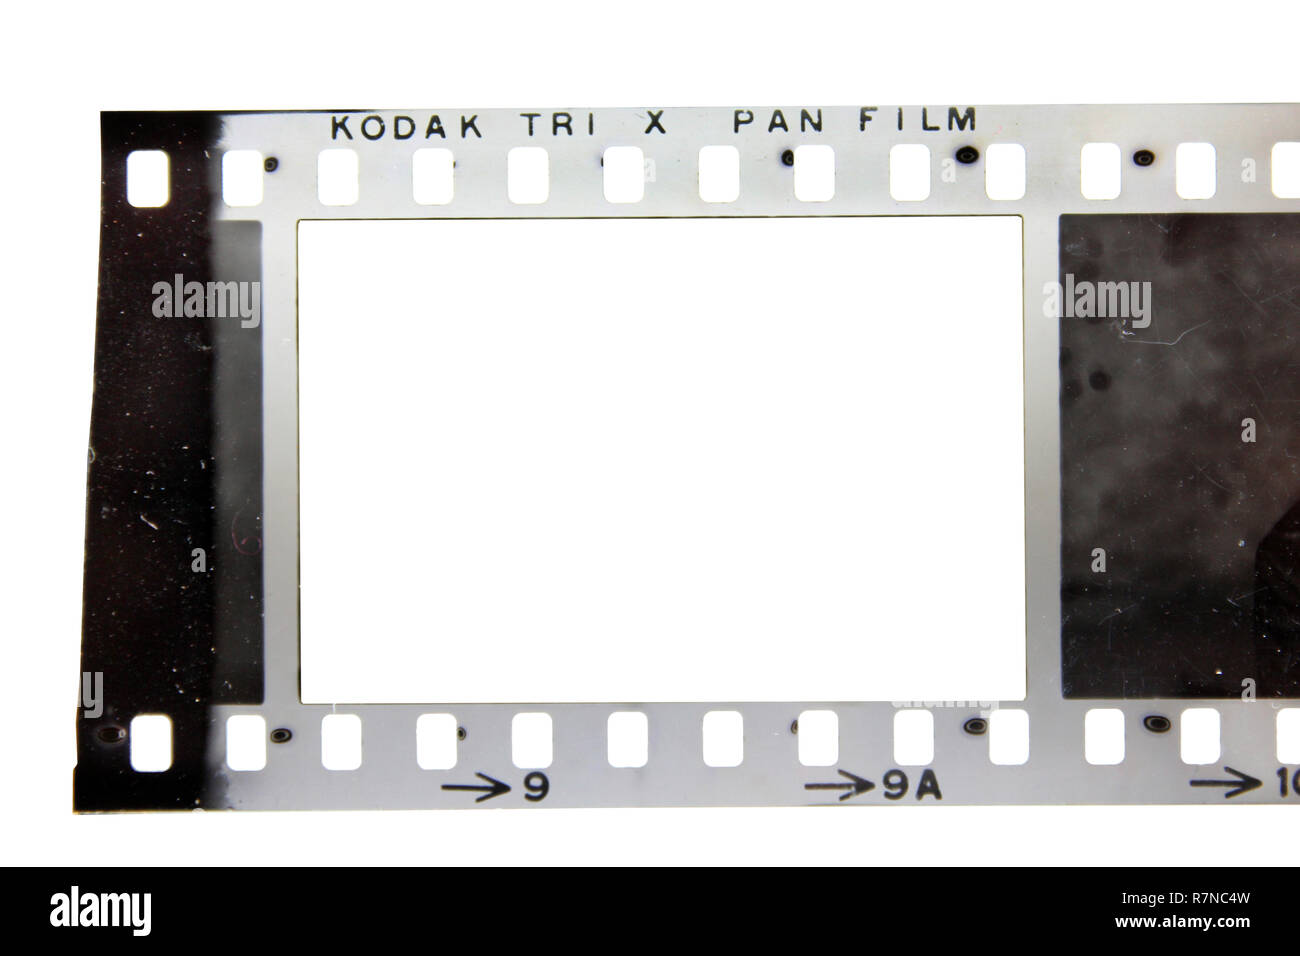 https://c8.alamy.com/comp/R7NC4W/35mm-kodak-tri-x-negative-filmstrip-frame-isolated-on-a-white-background-R7NC4W.jpg